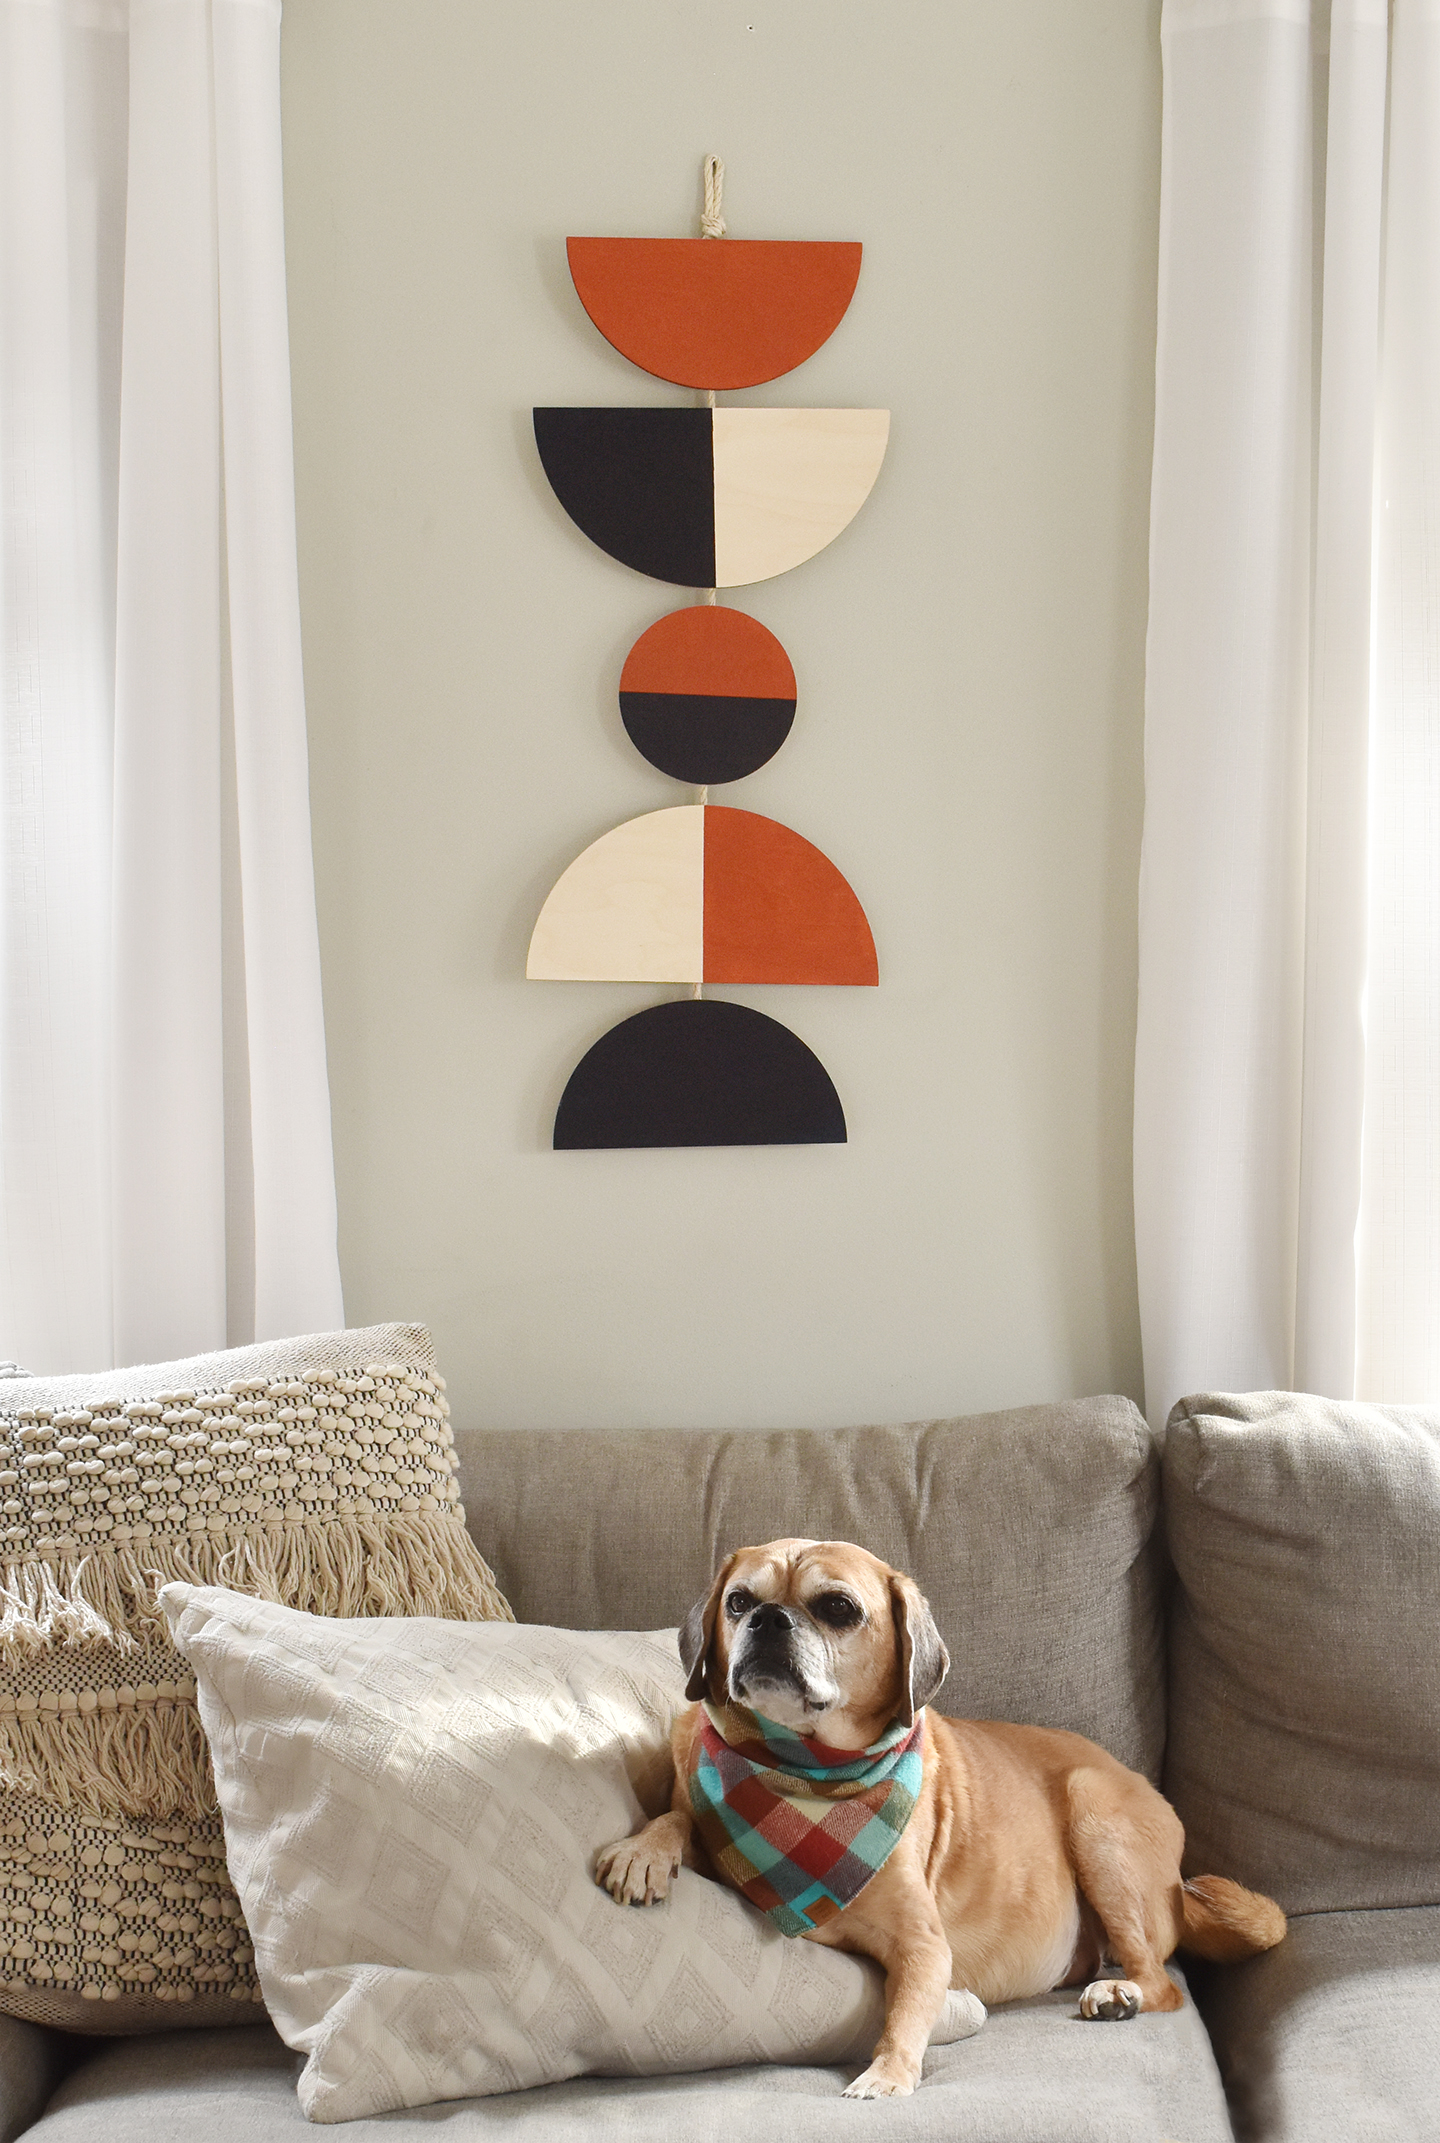 Easy DIY Boho Wall Hanging Using Wood Half Circles /// By Design Fixation #home #decor #bohemian #wood